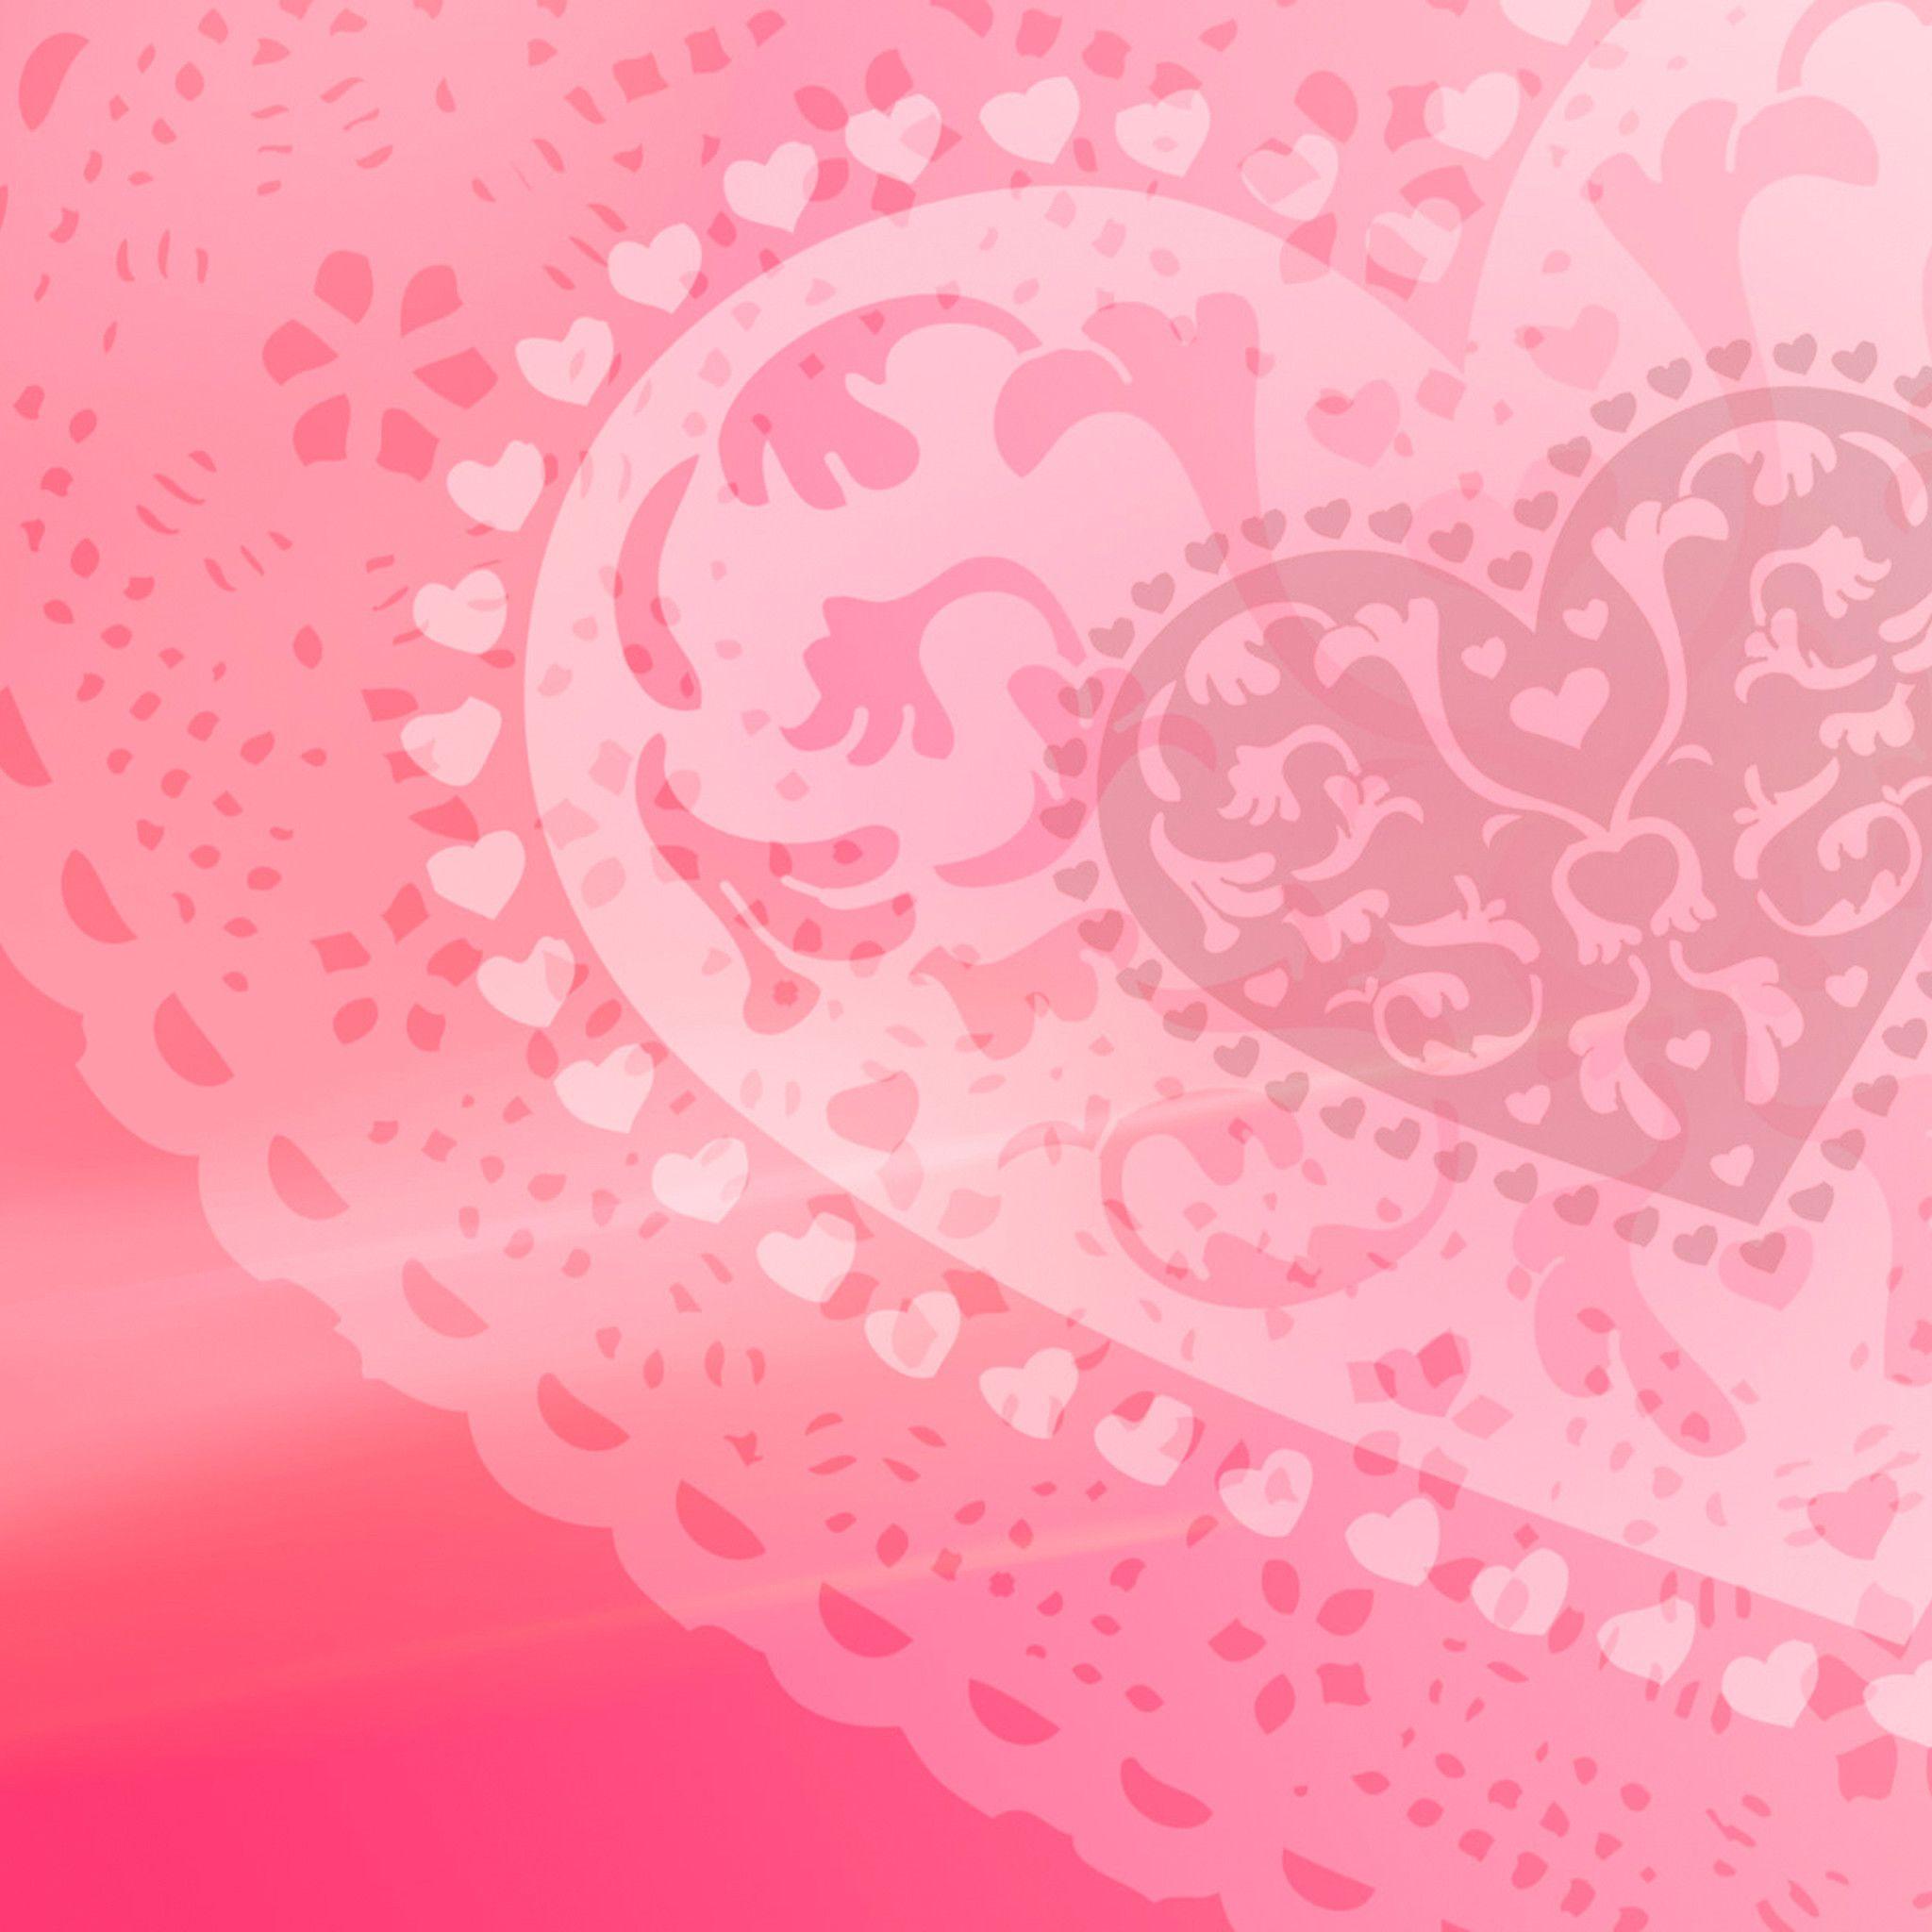 Pink Heart iPad Air Wallpaper Download. iPhone Wallpaper, iPad